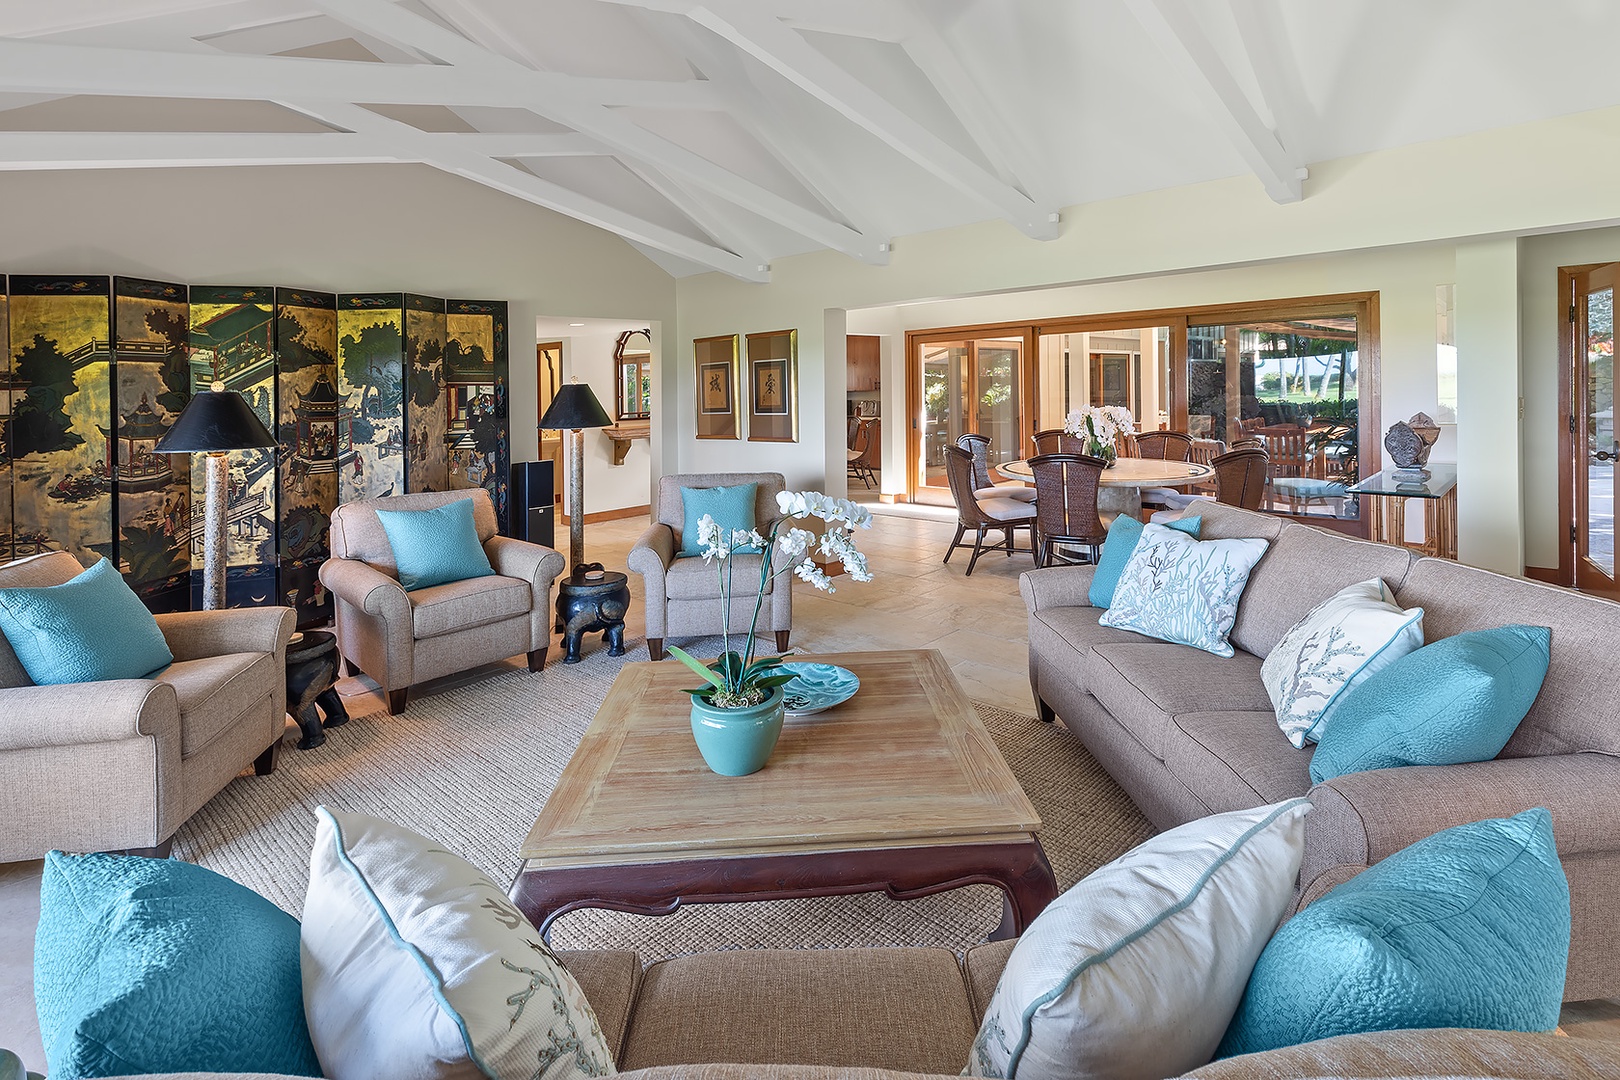 Kailua Vacation Rentals, Kailua Shores Estate 8 Bedroom - Main House - Formal Living